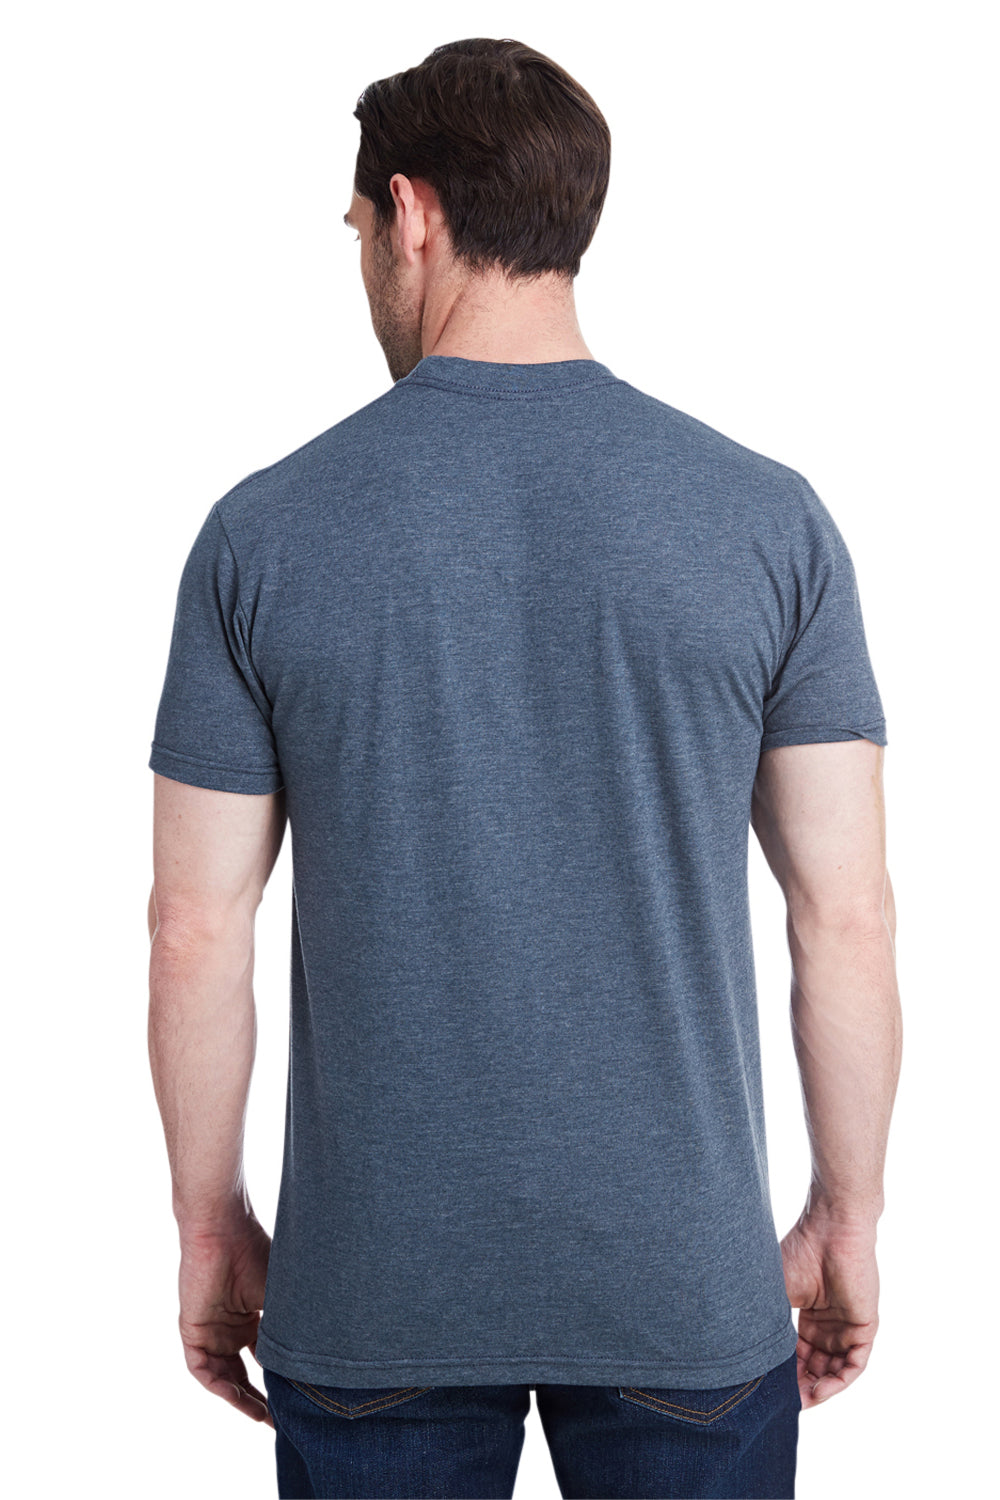 Bayside 5710 Mens USA Made Short Sleeve Crewneck T-Shirt Dark Grey Model Back